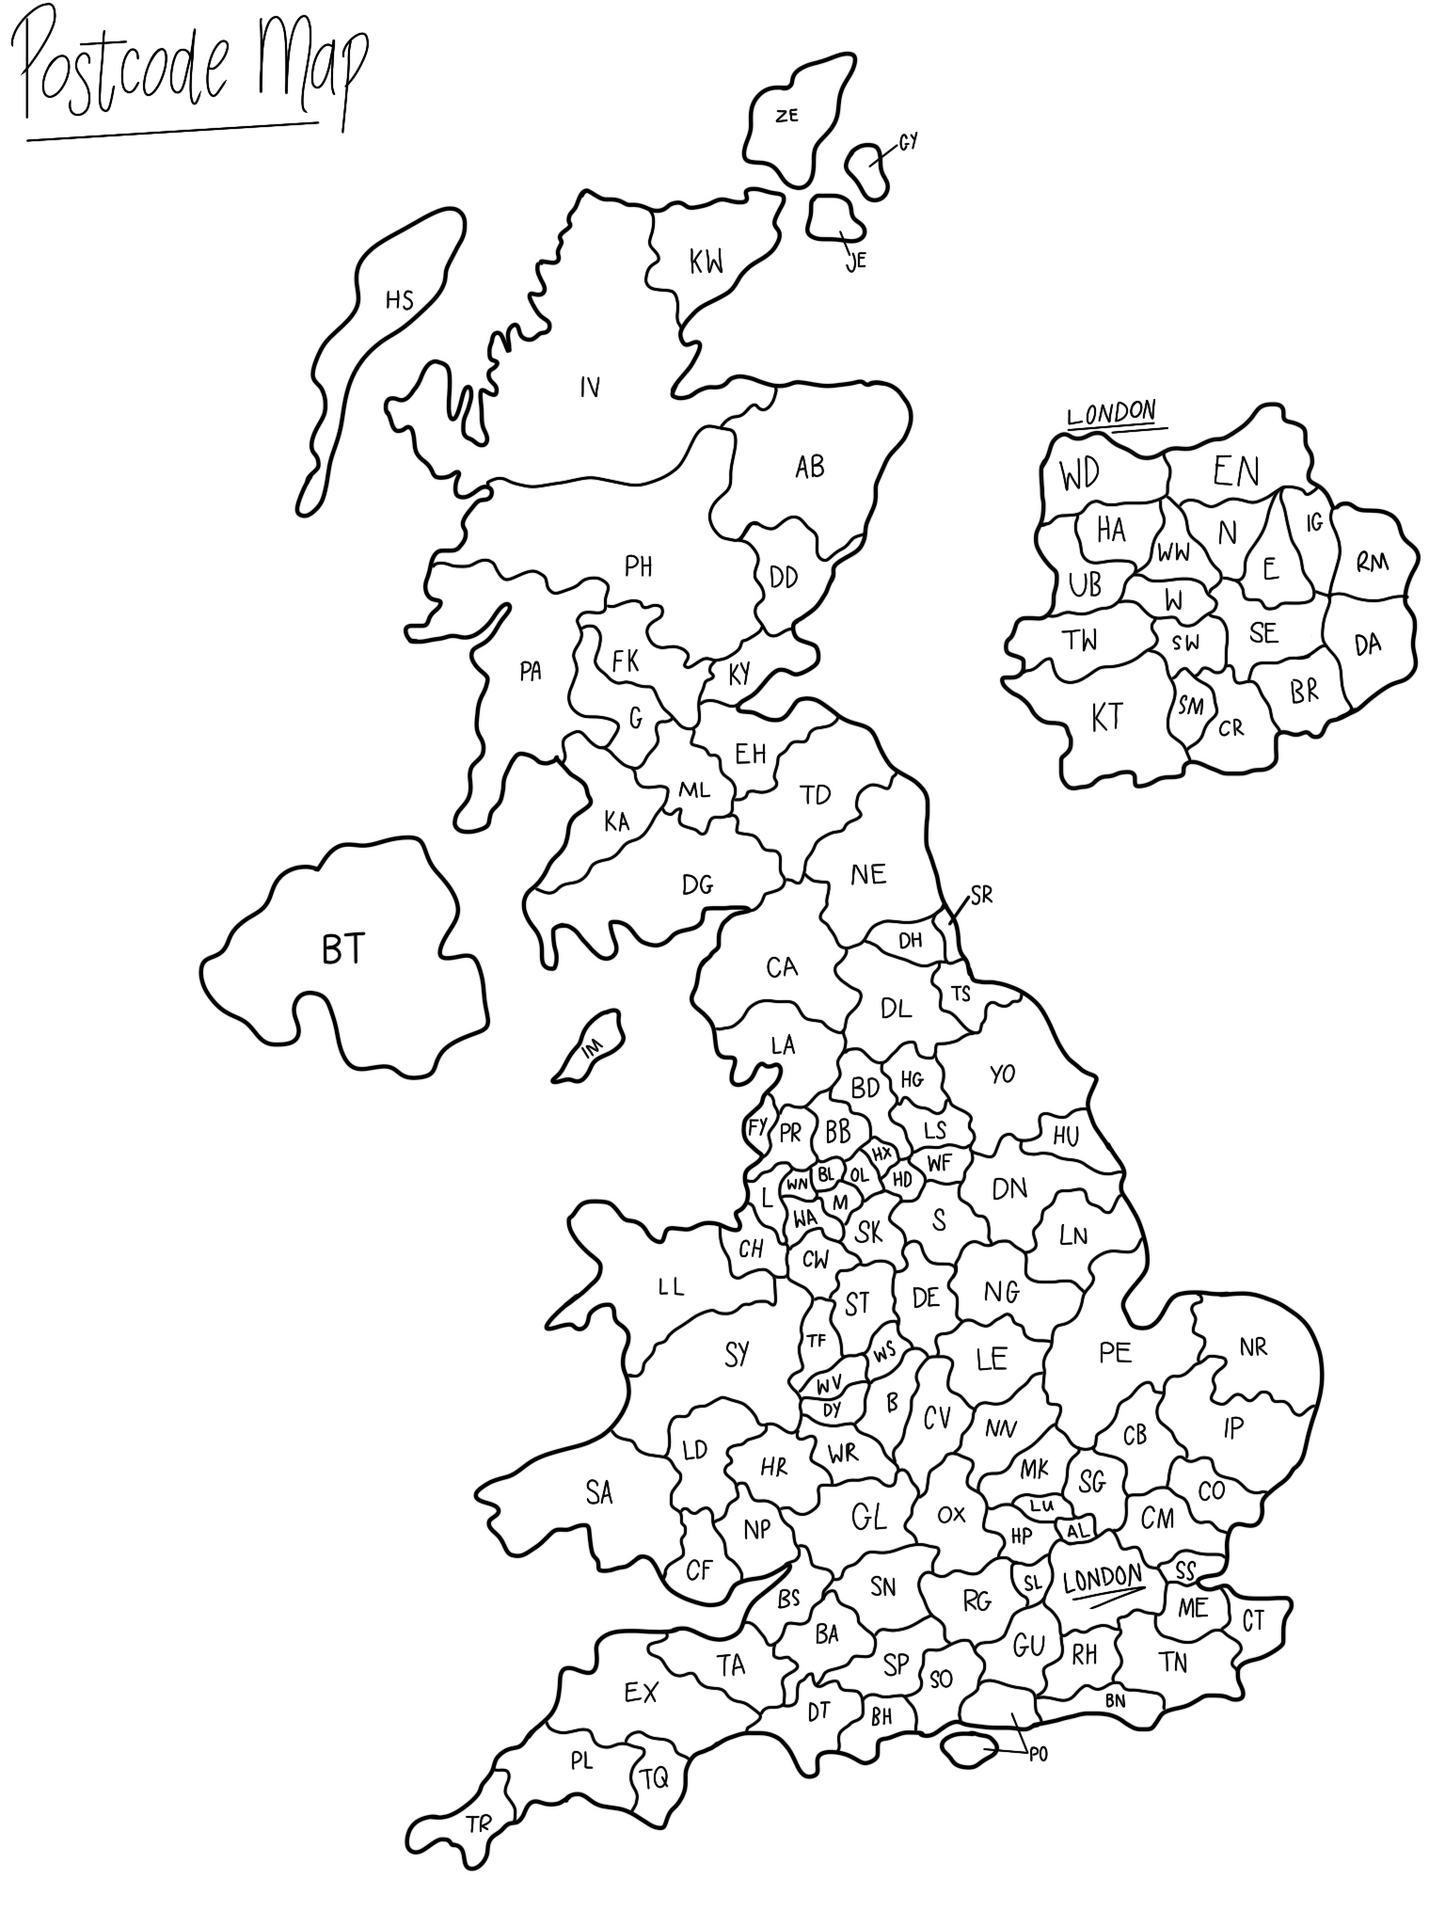 Postcode Order Map (Blank)